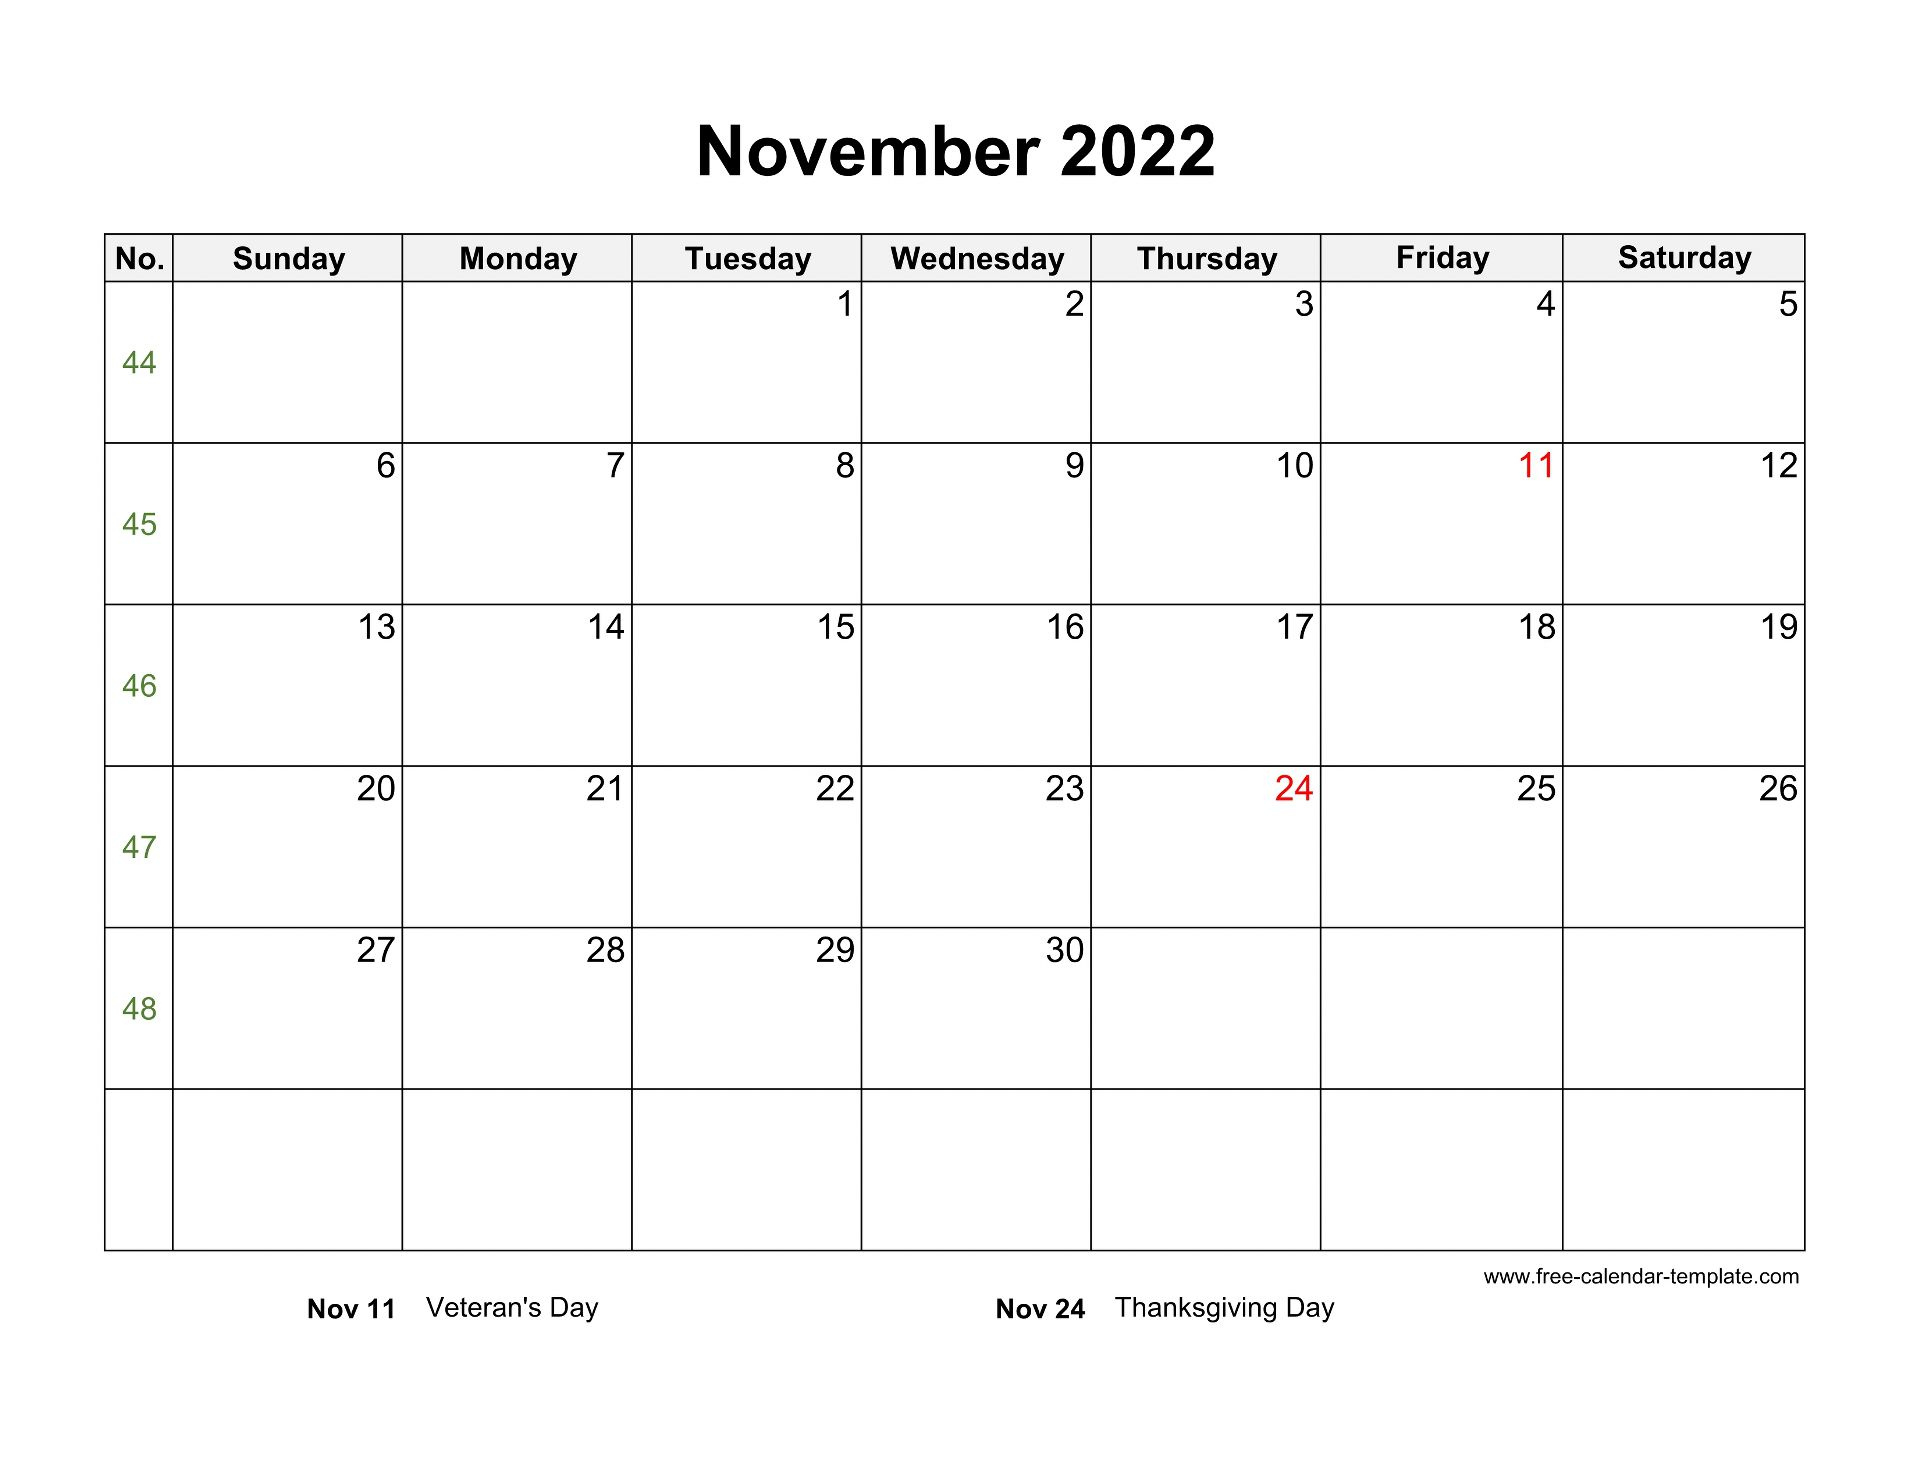 November 2022 Free Calendar Tempplate | Free-Calendar November 2022 Calendar Template